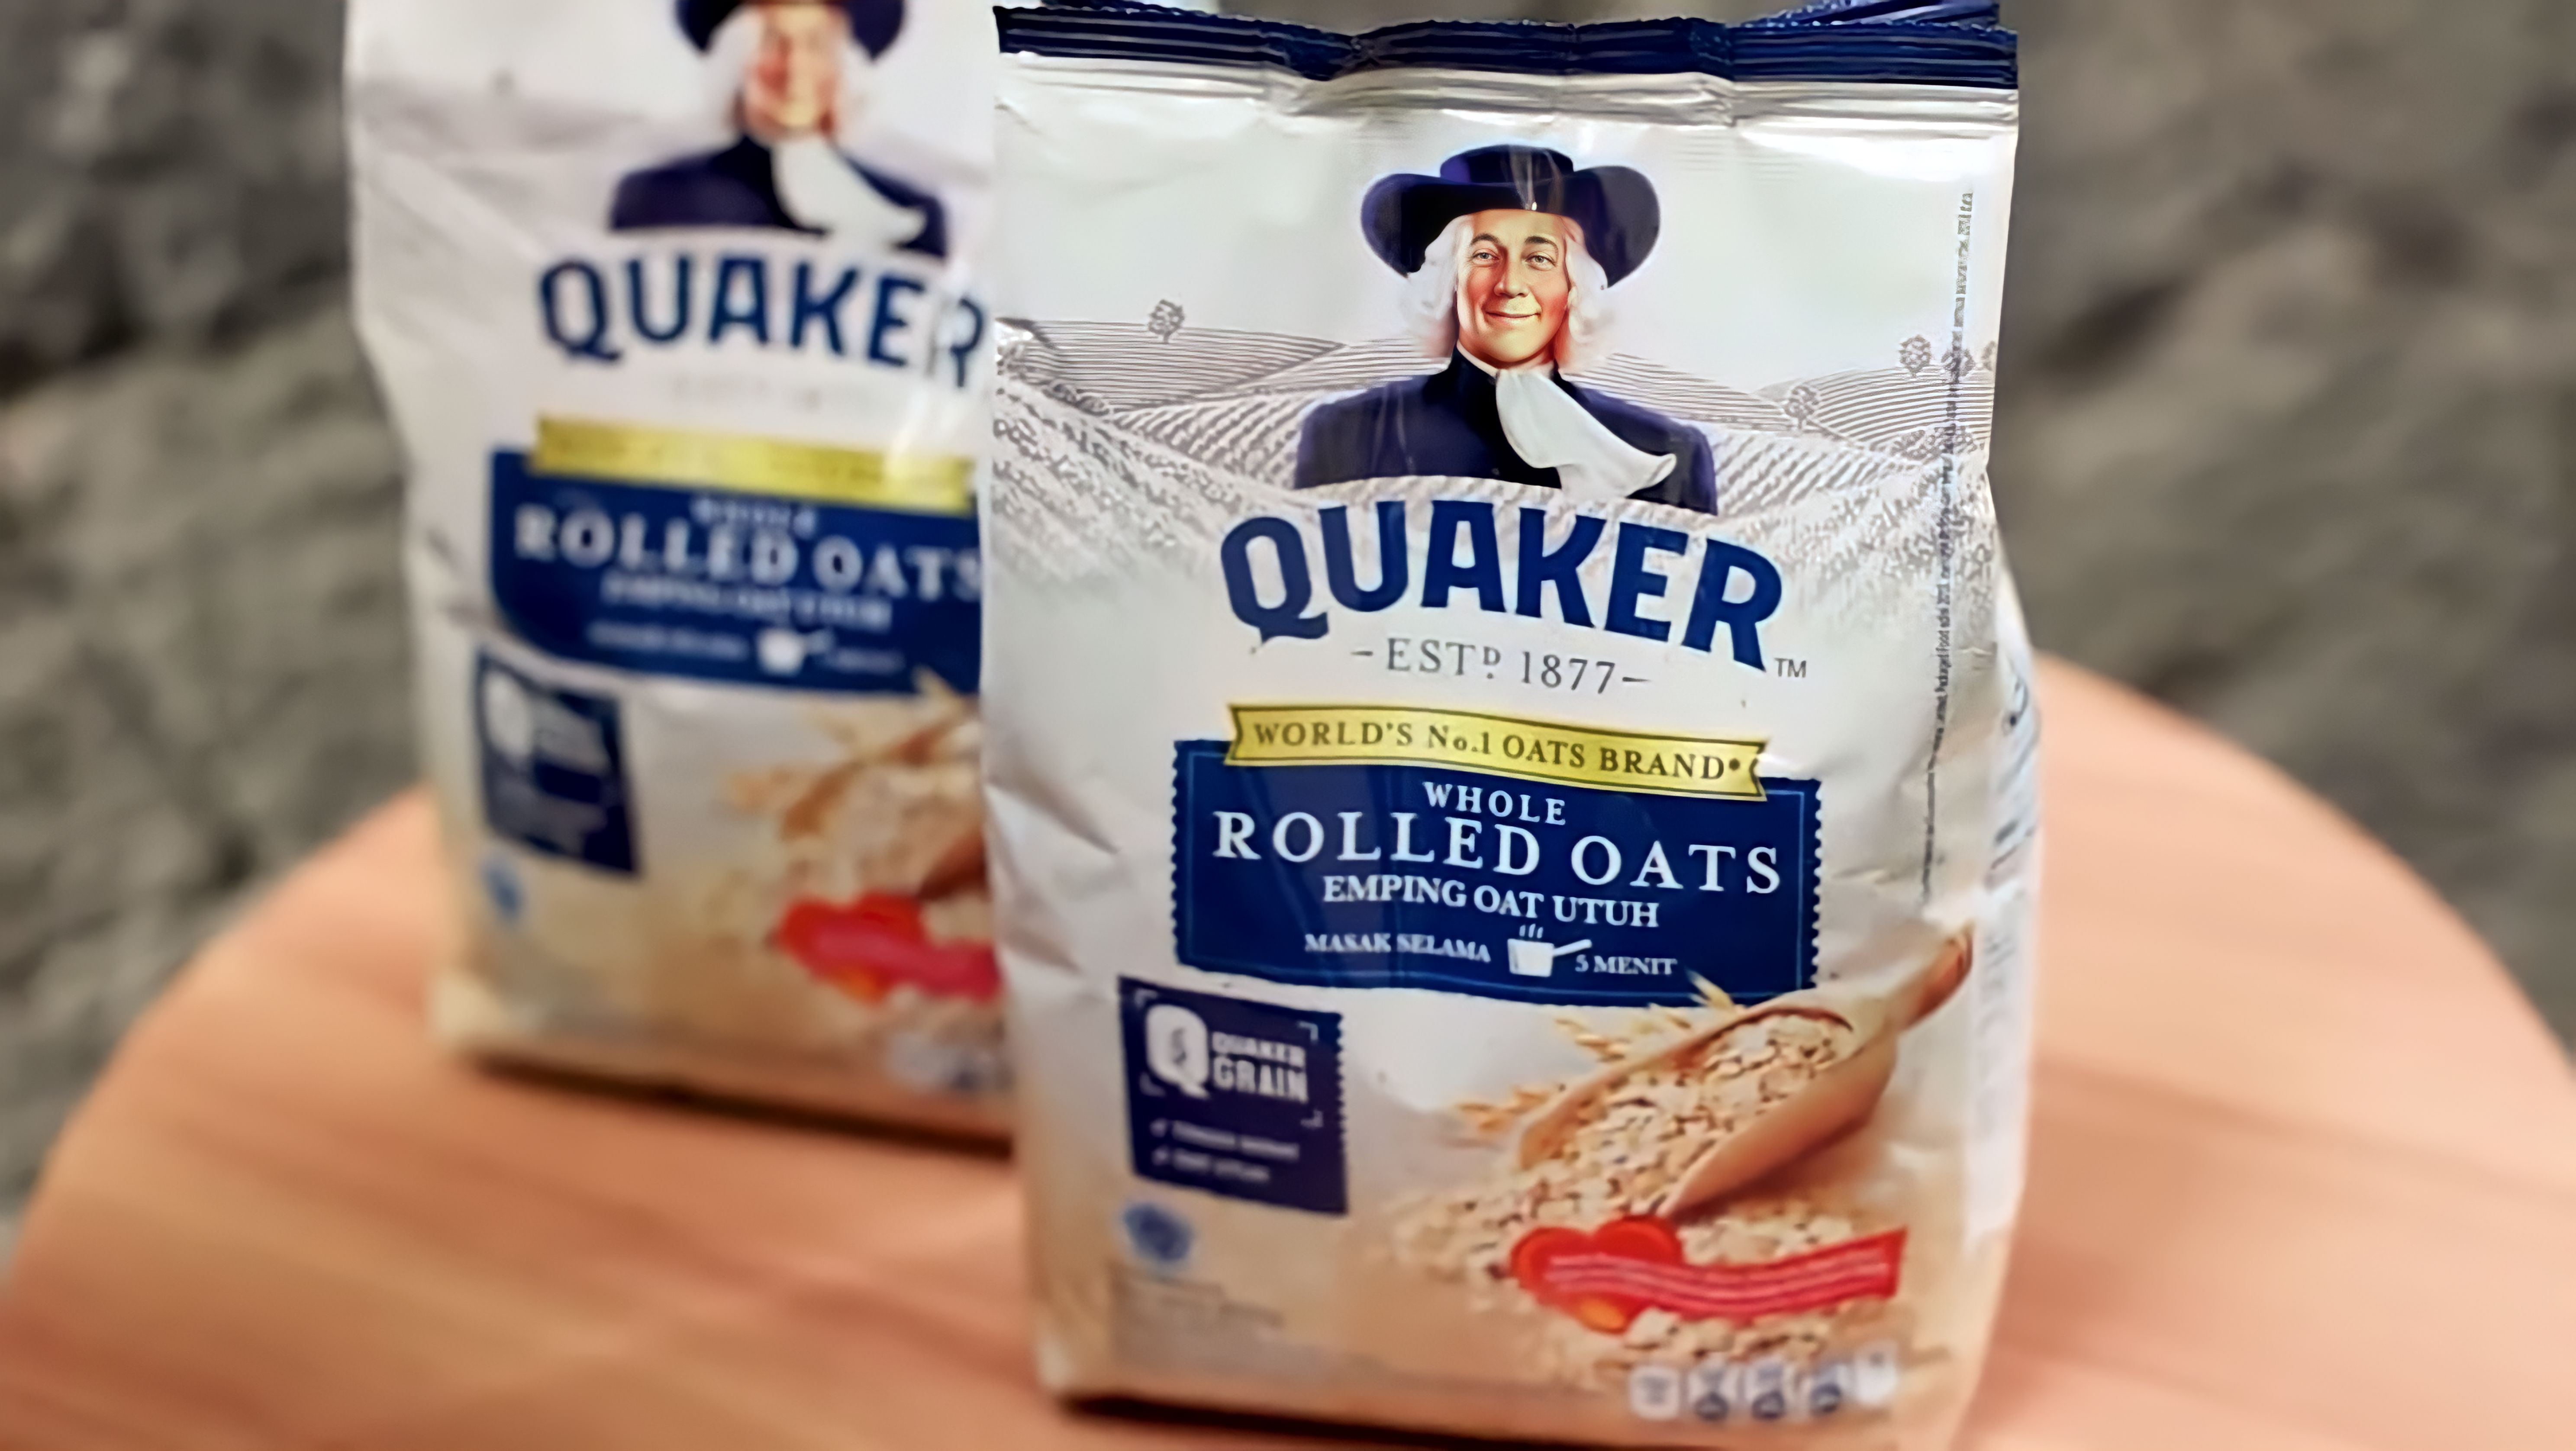 3. Rolled oats